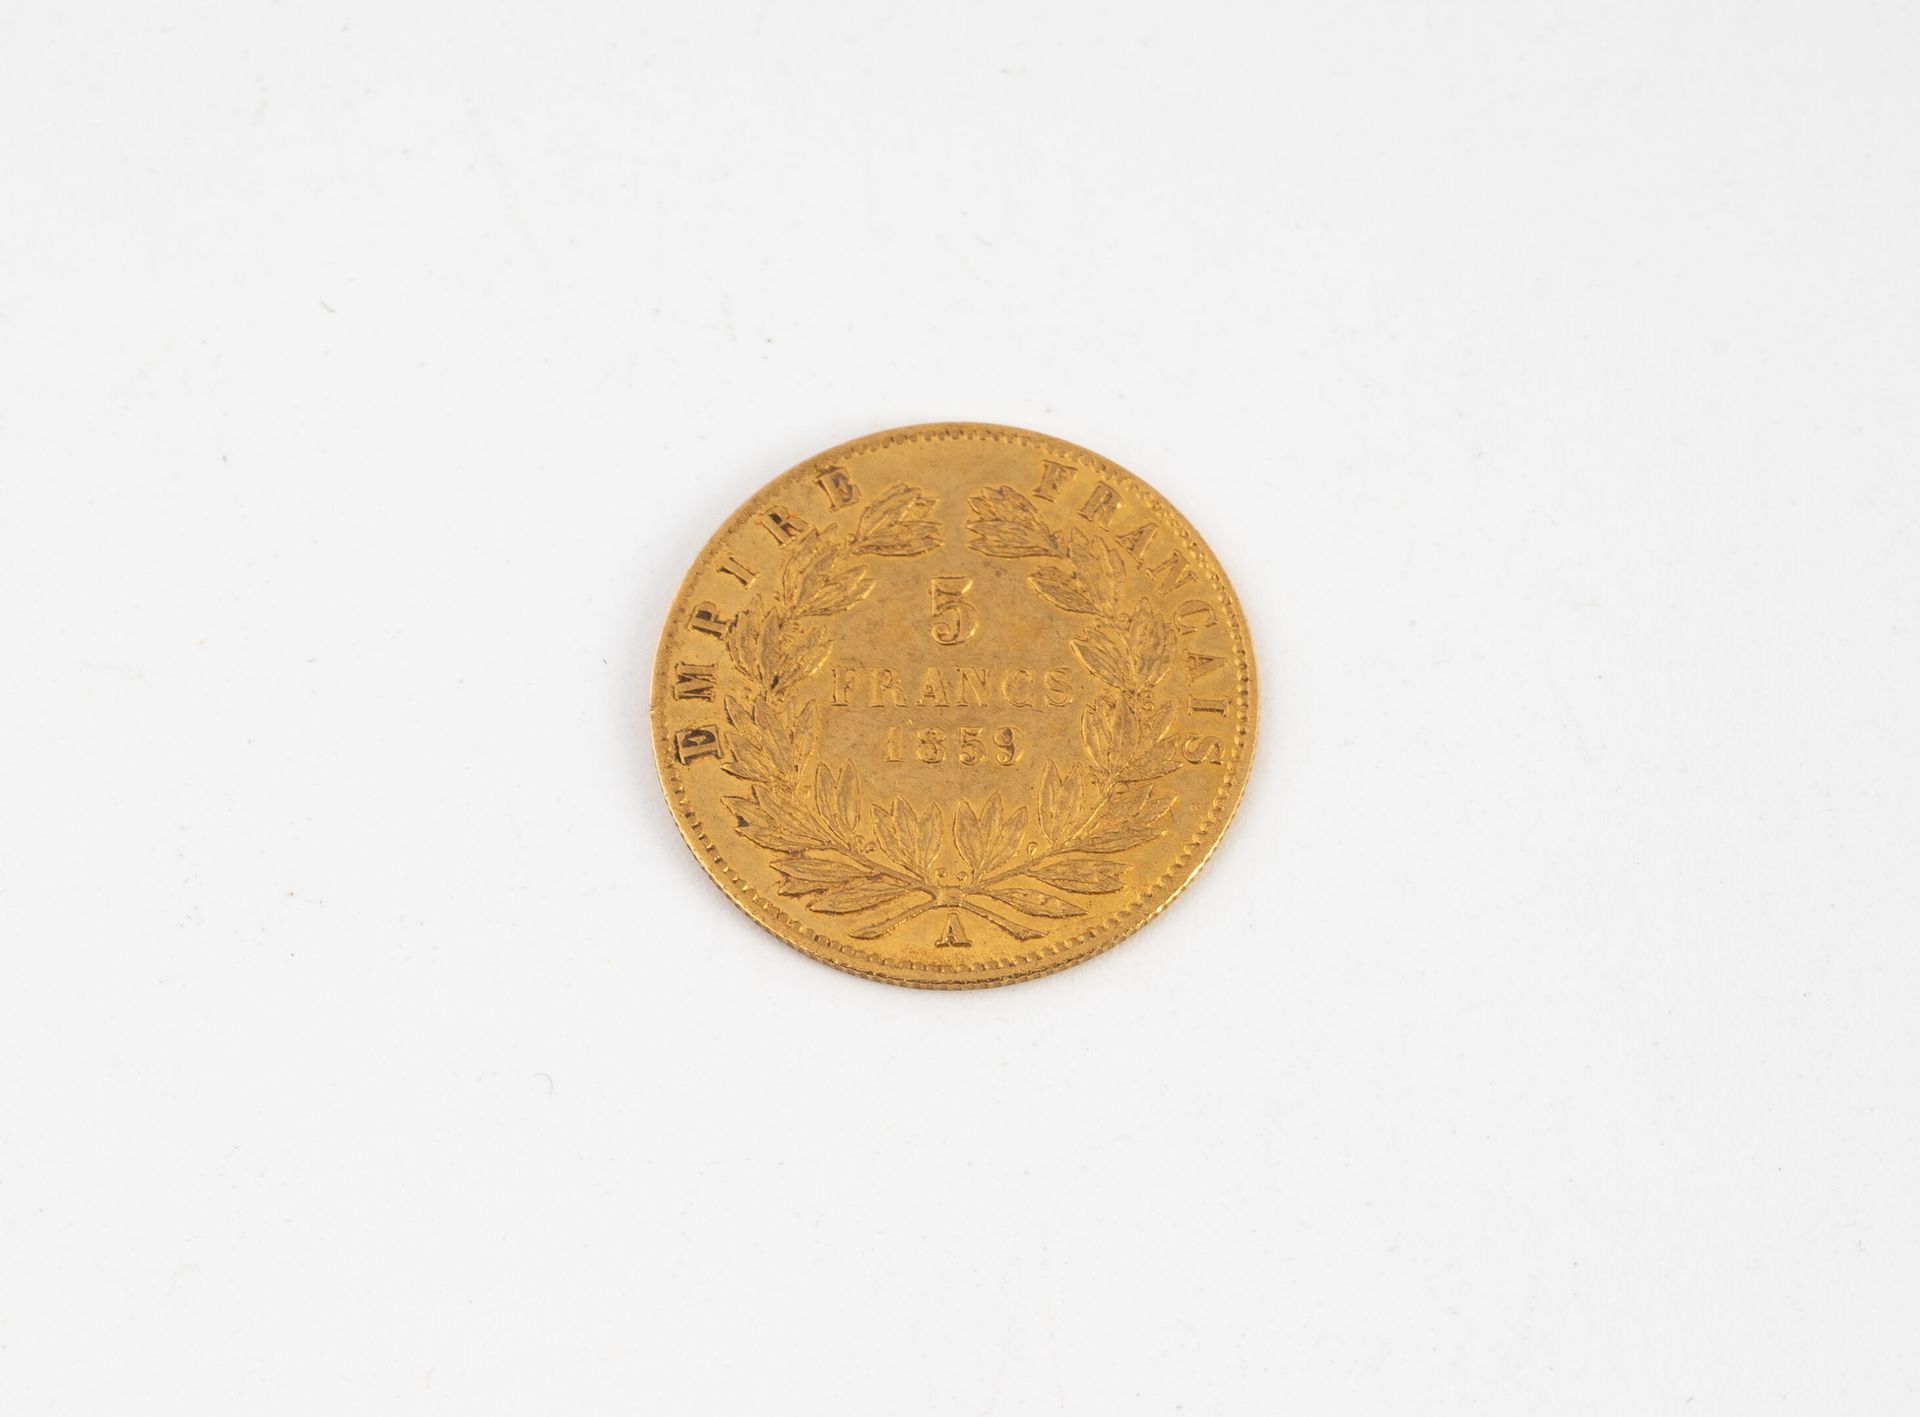 FRANCE Moneta d'oro da 5 franchi Napoleone III 1859.
Peso: 1,59 g.
Graffi e usur&hellip;